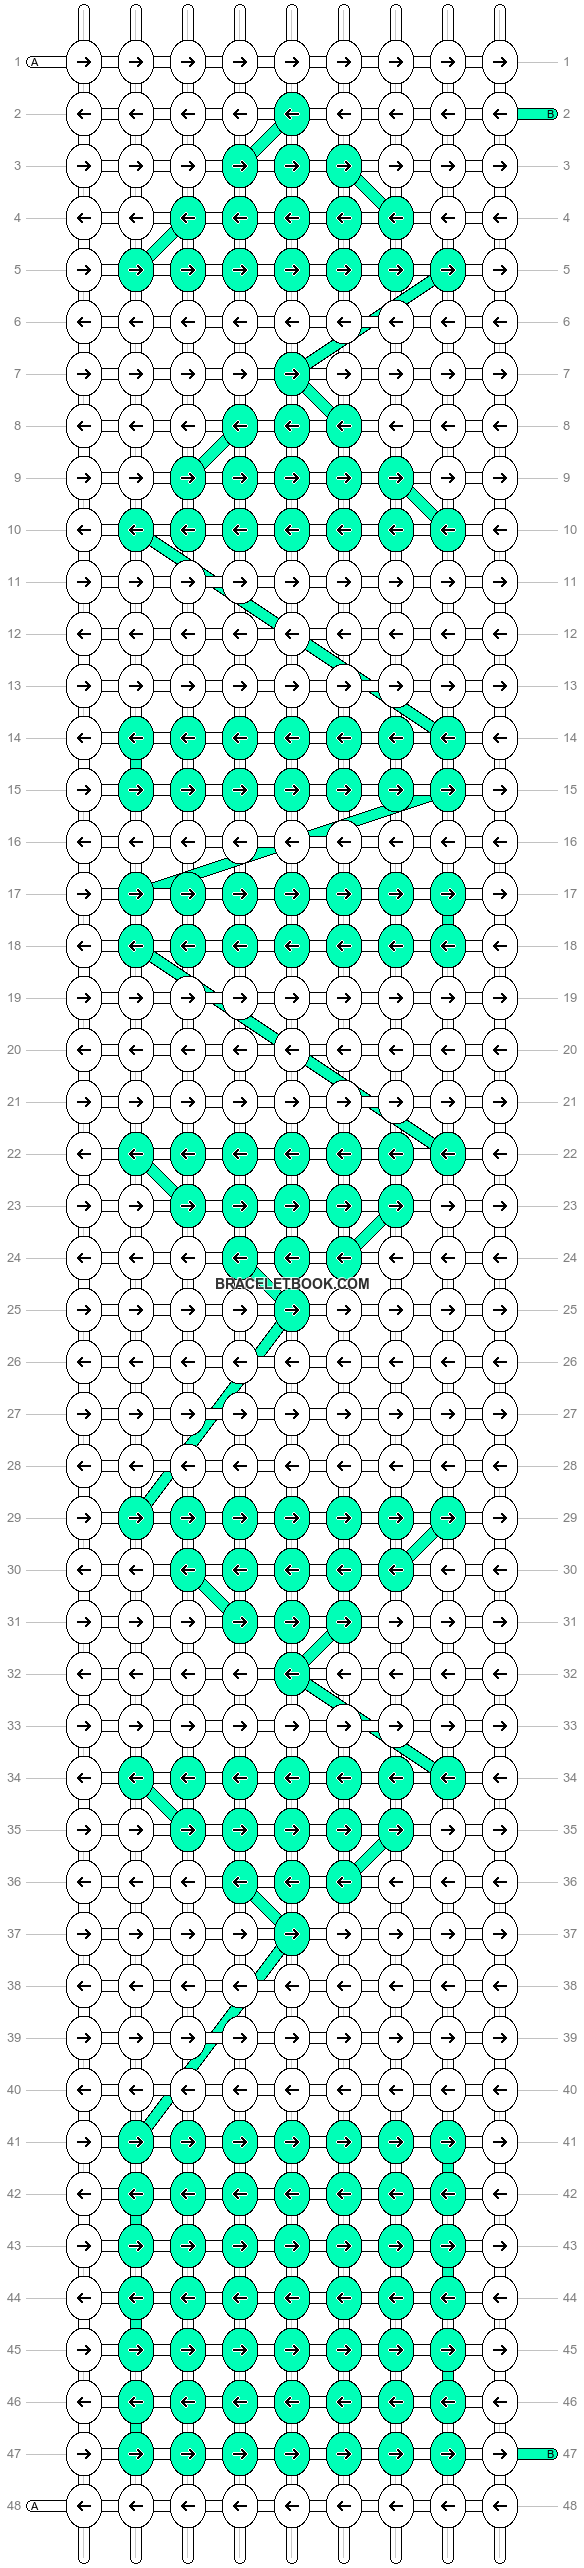 Alpha pattern #2979 variation #55365 pattern